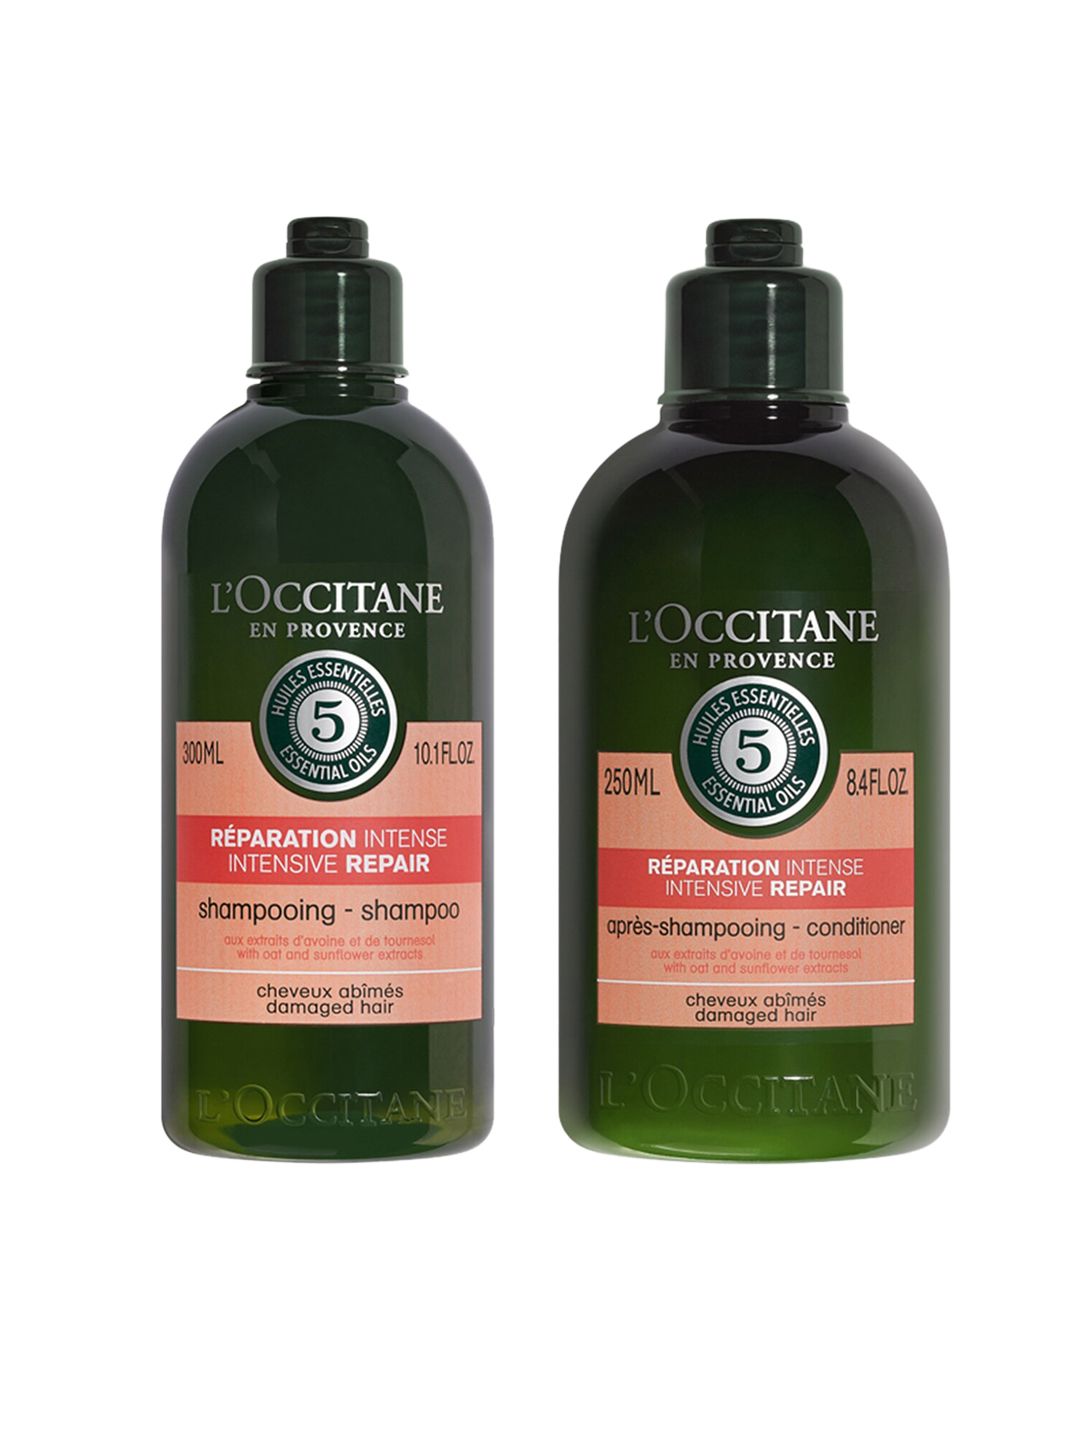 LOccitane en Provence Set of Intensive Repair Shampoo 300 ml & Conditioner 250 ml Price in India